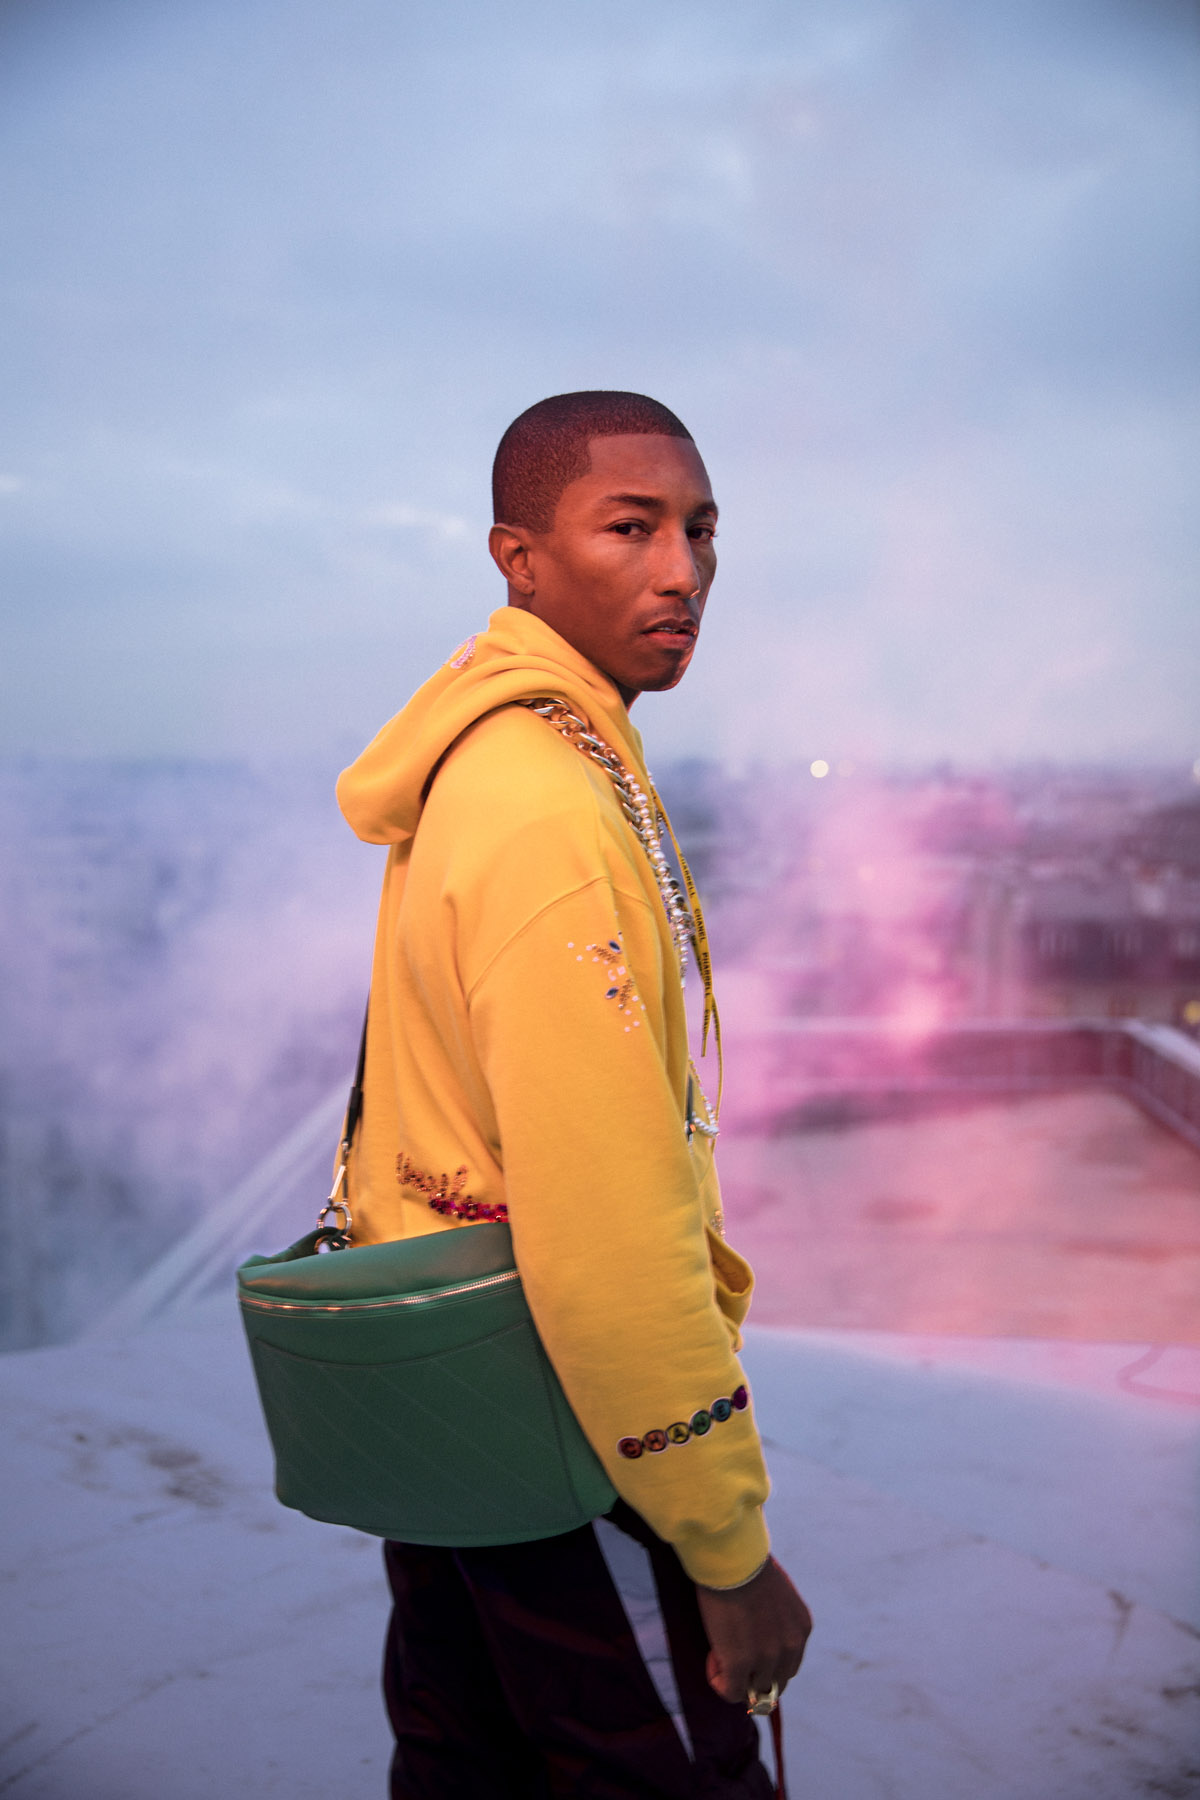 A Timeline of Pharrell Williams' Ascendance Into a Fashion Icon